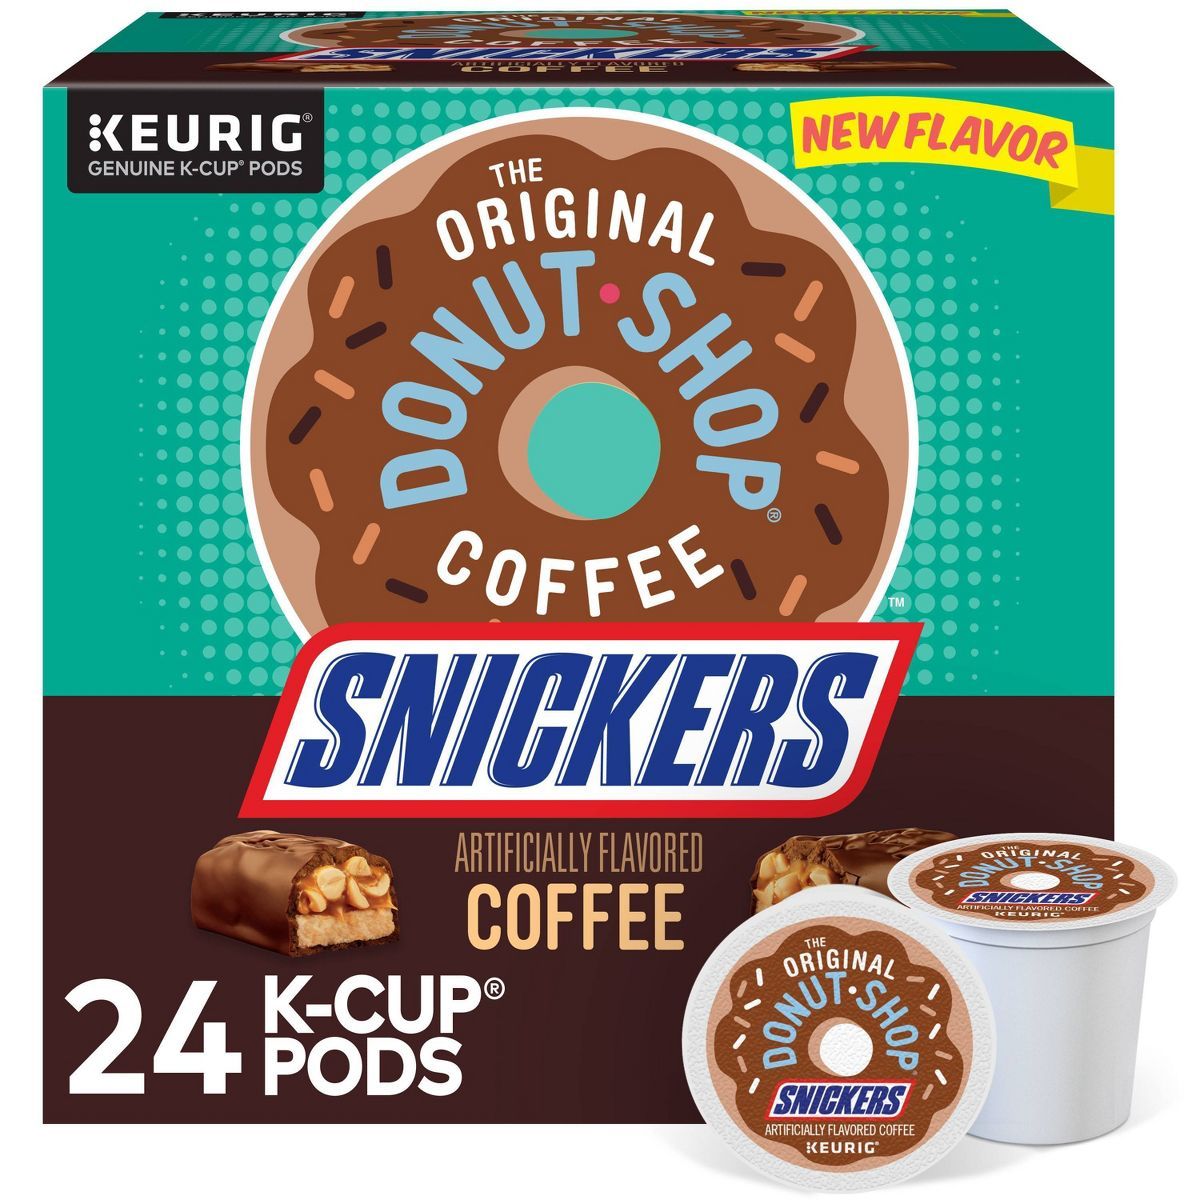 The Original Donut Shop Snickers Medium Roast Coffee Keurig - K-Cup Coffee Pods 24ct | Target